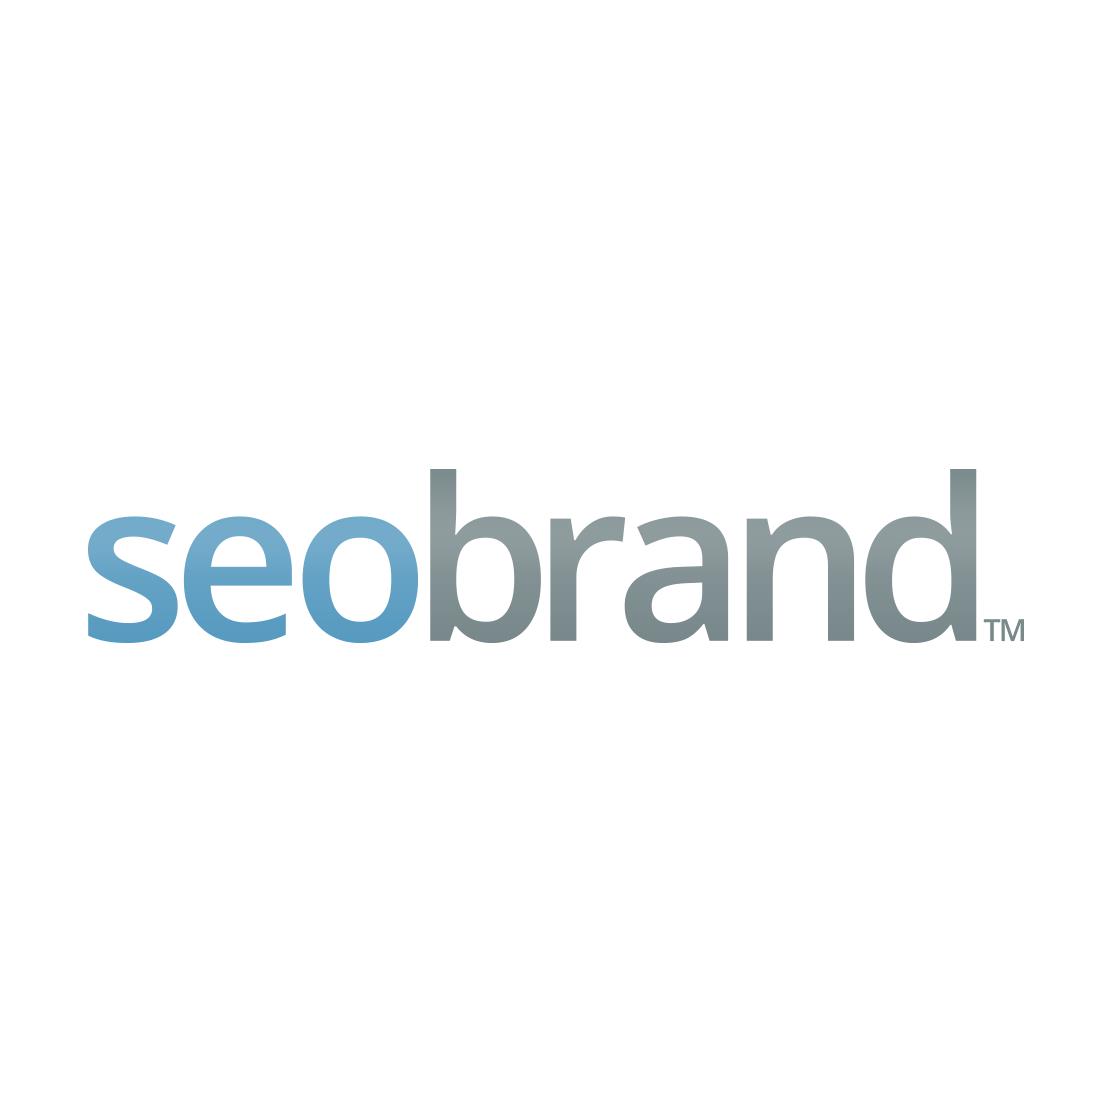 Best Online Marketing Company Logo: SEO Brand